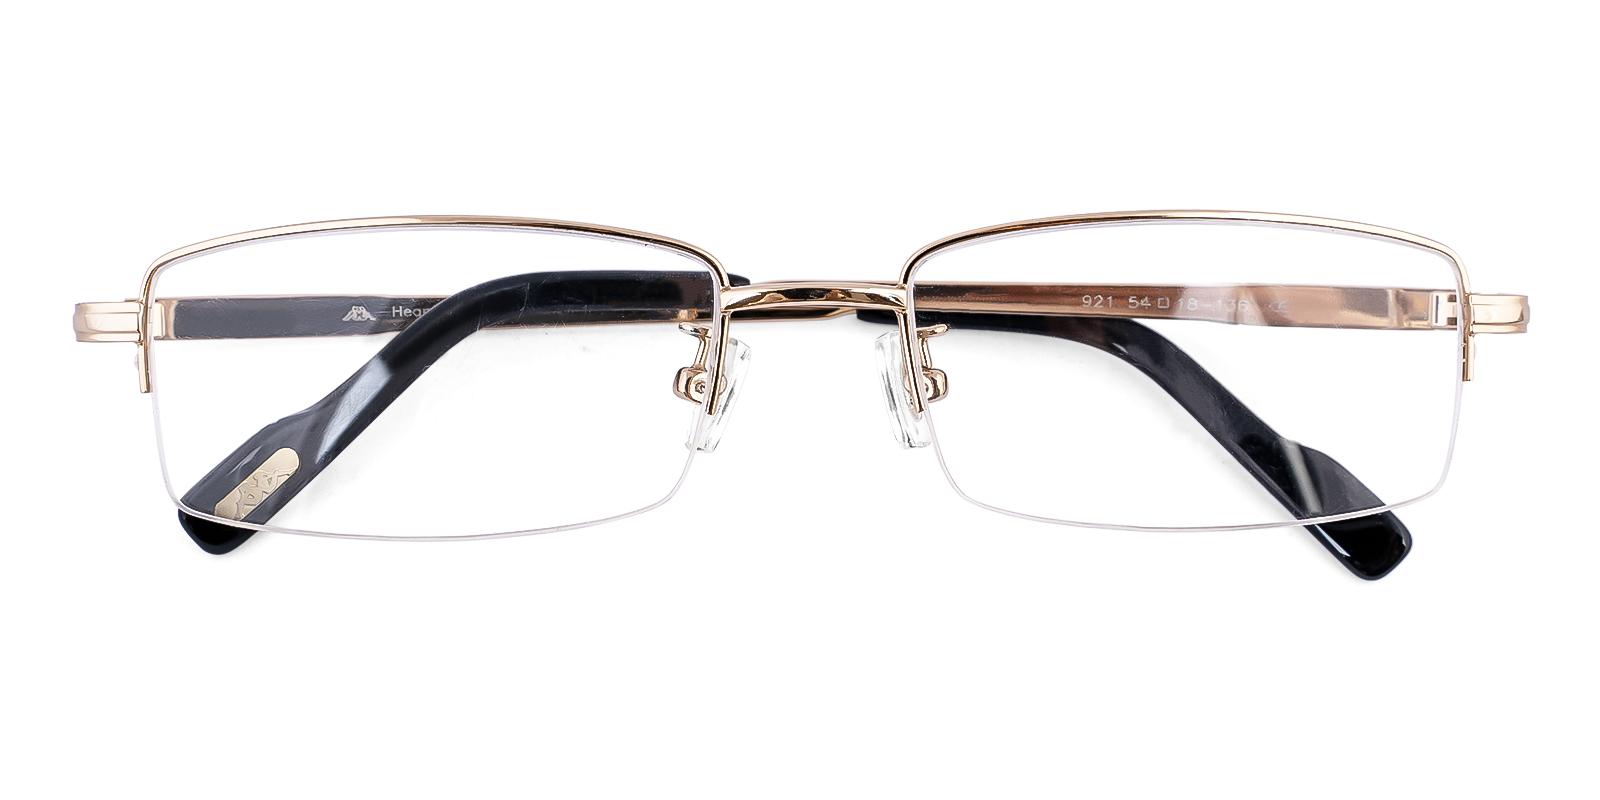 Glorigun Gold Metal Eyeglasses , NosePads Frames from ABBE Glasses